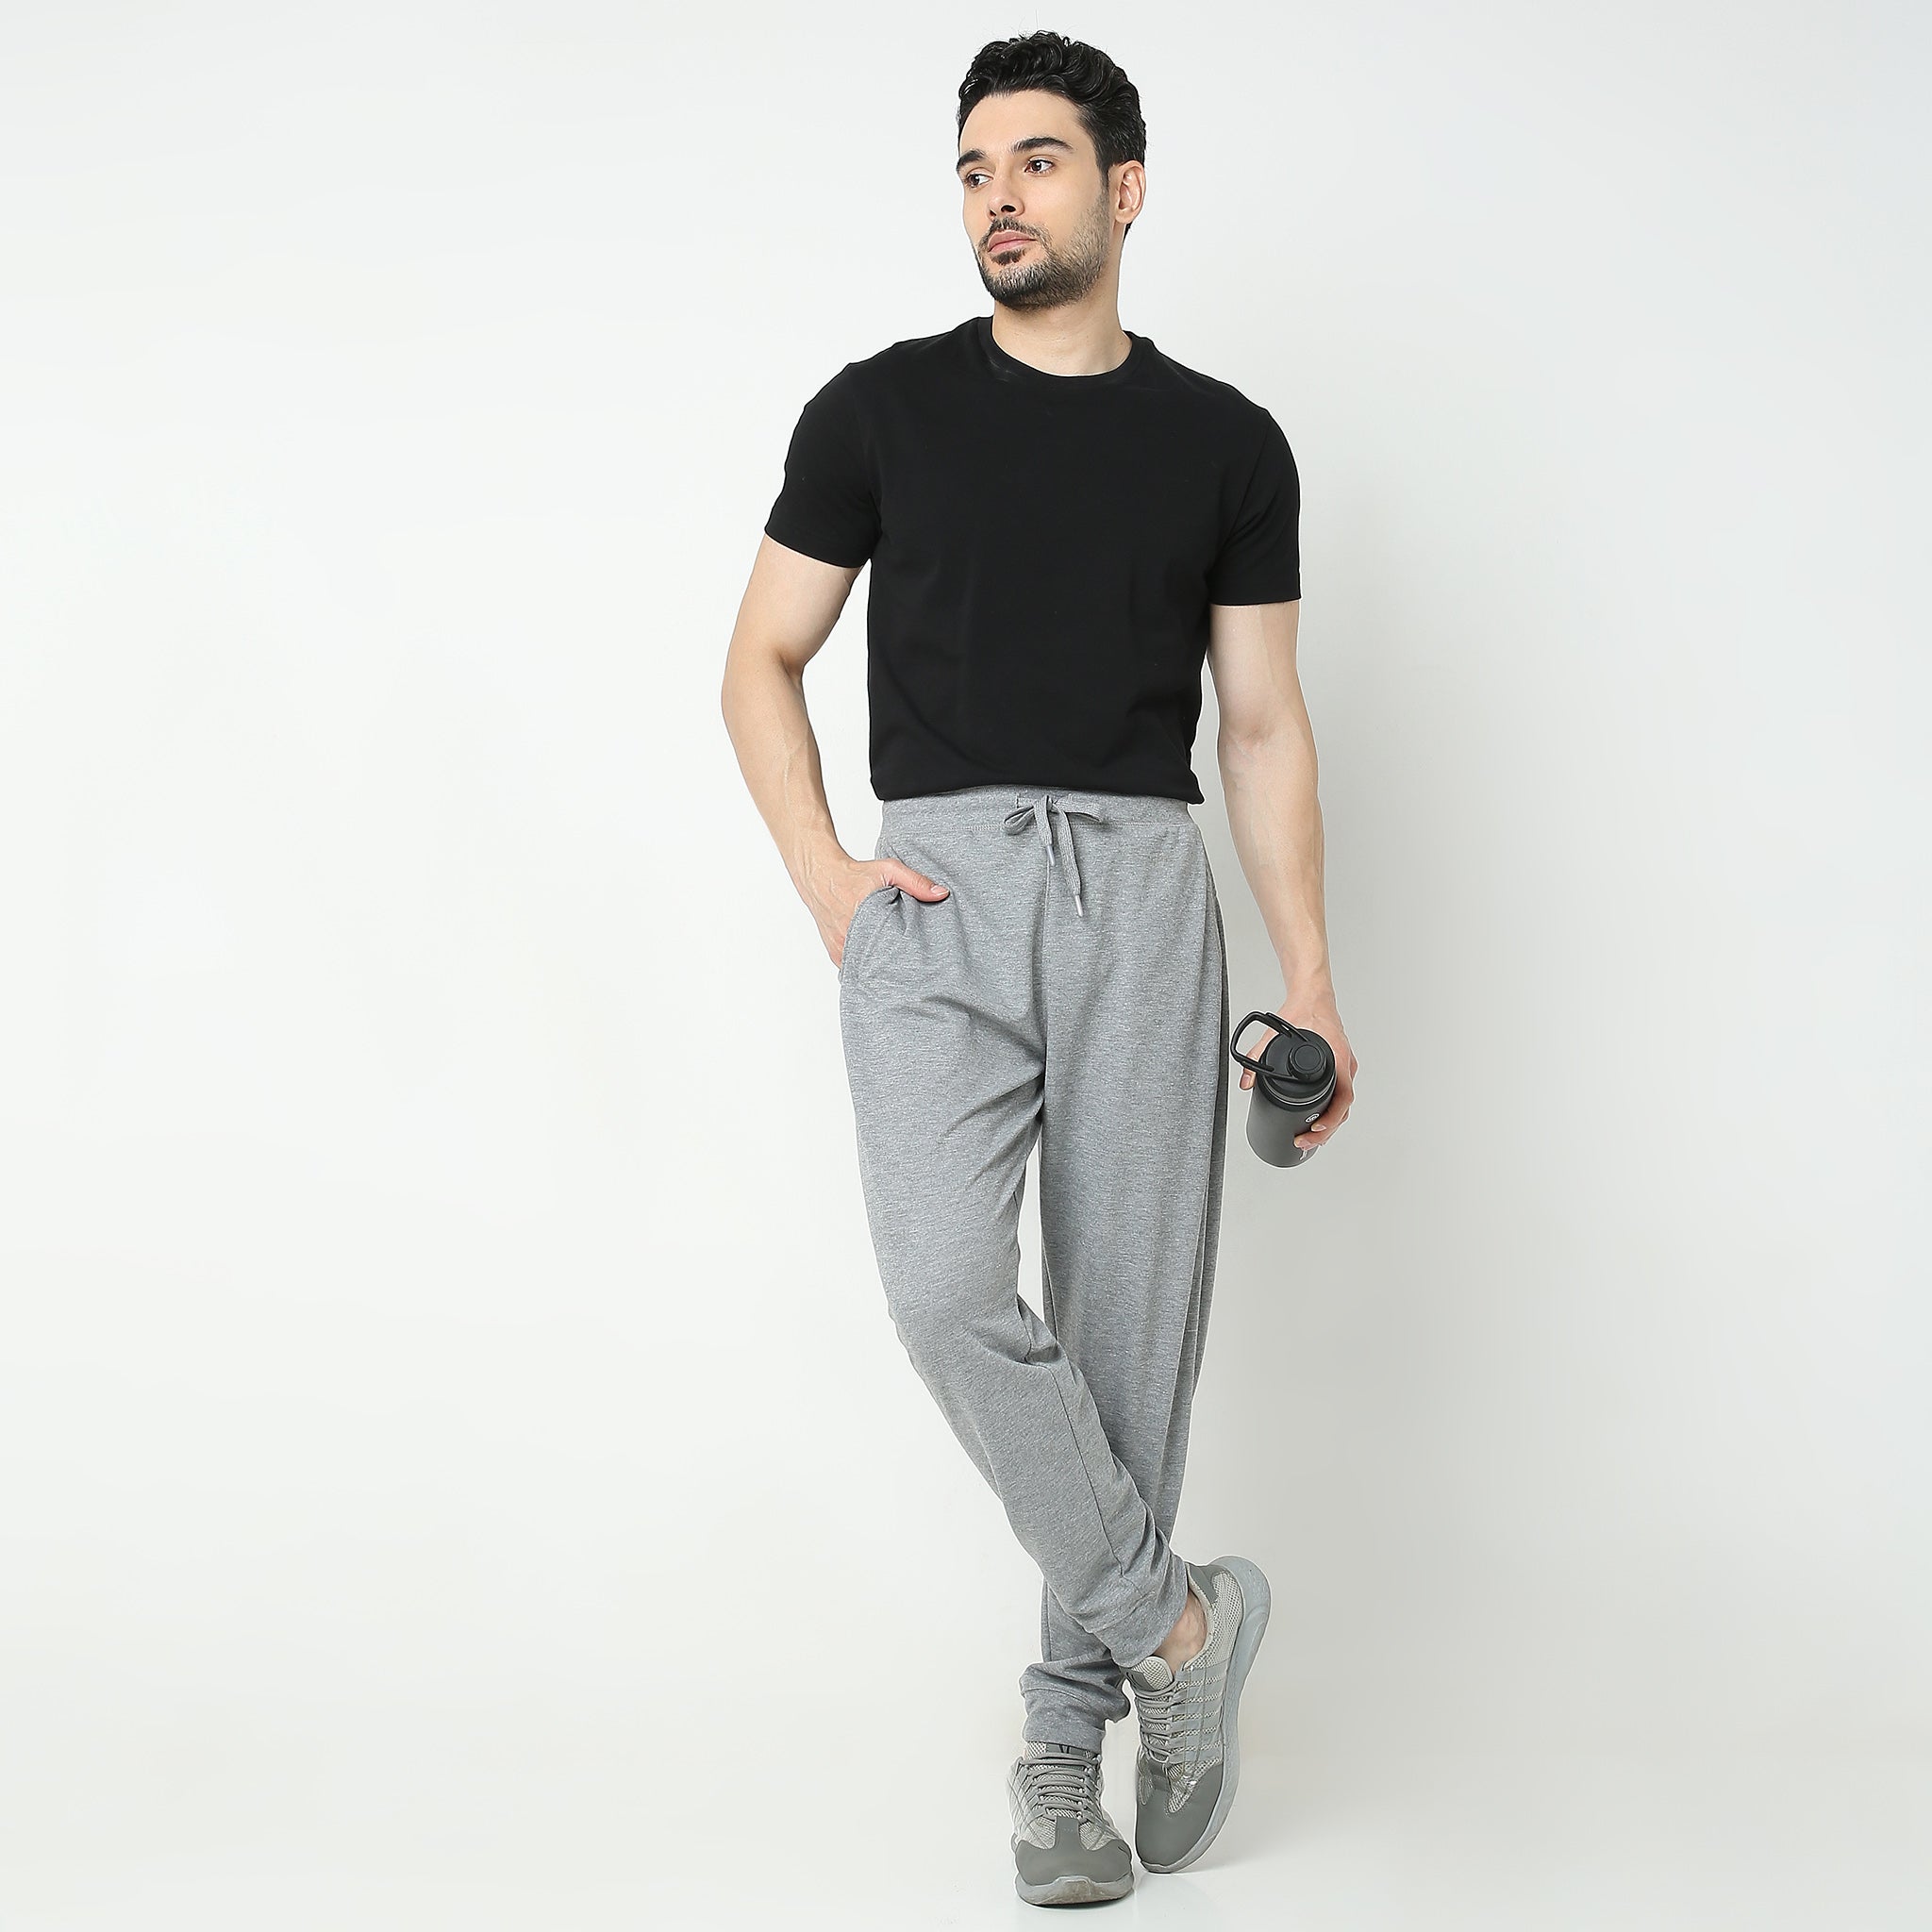 Men's Track Pants - Buy Track Pants for Men Online at Best Prices